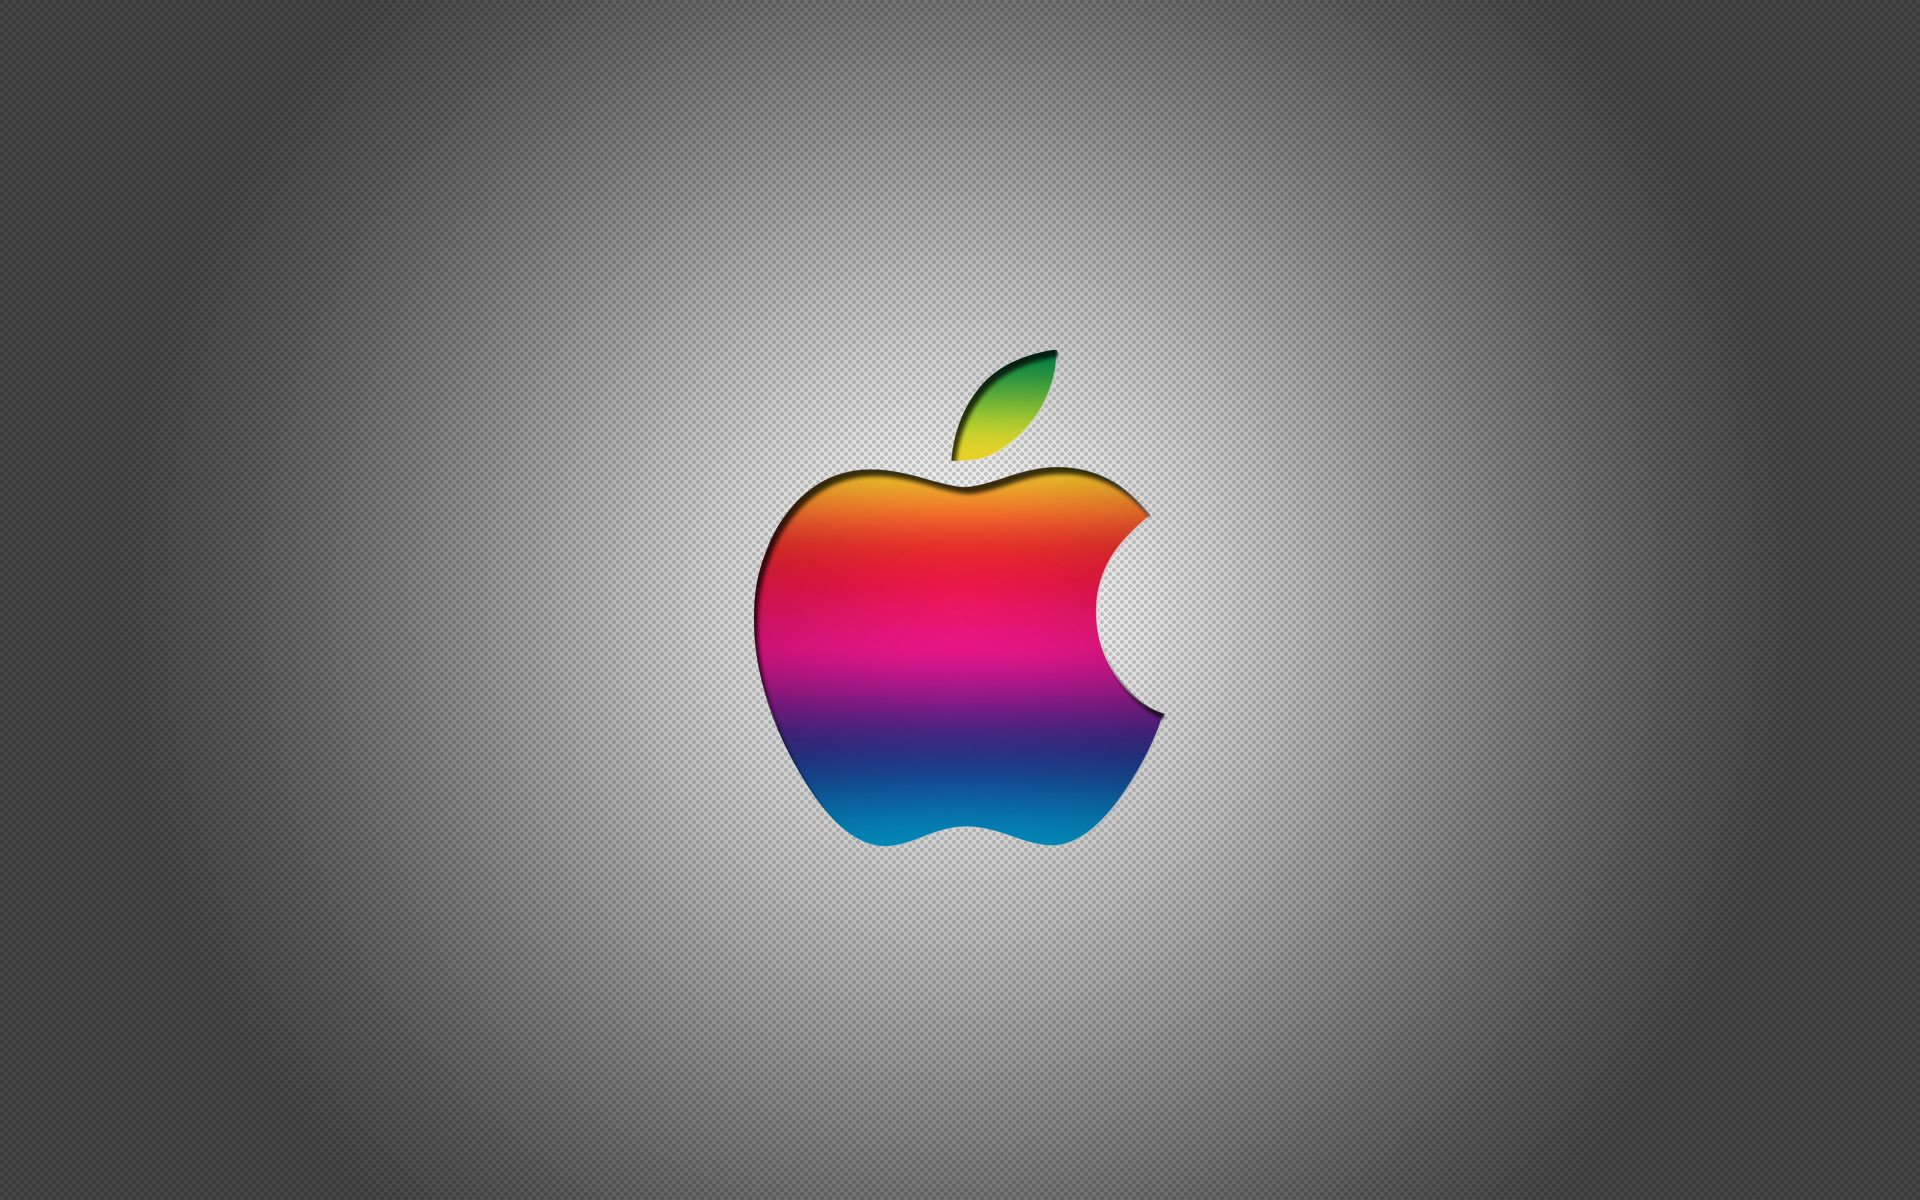 Обои на айфон яблоко. Яблоко Эппл 4800*3301. Логотип Эппл. Эпл яблоко лого. Фон Apple.